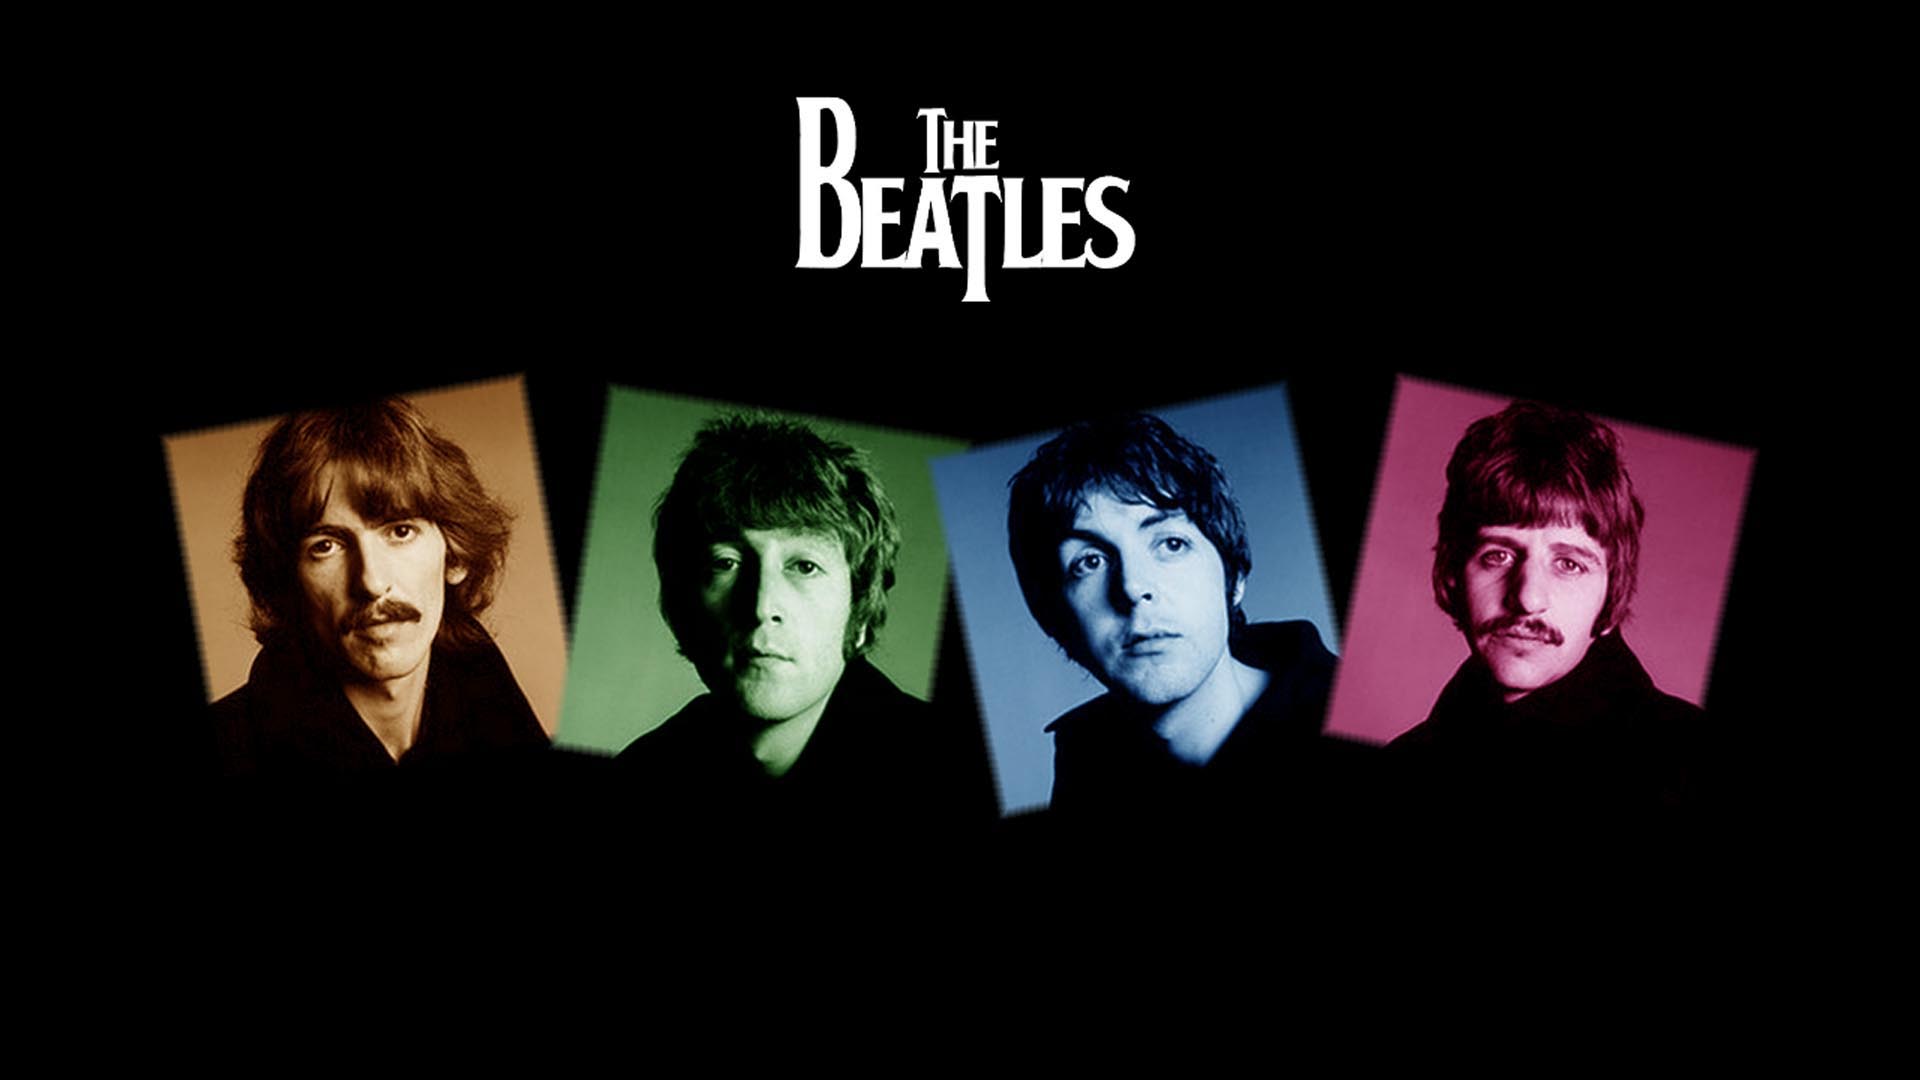 The Beatles Wallpaper HD - Wallpapernine.com